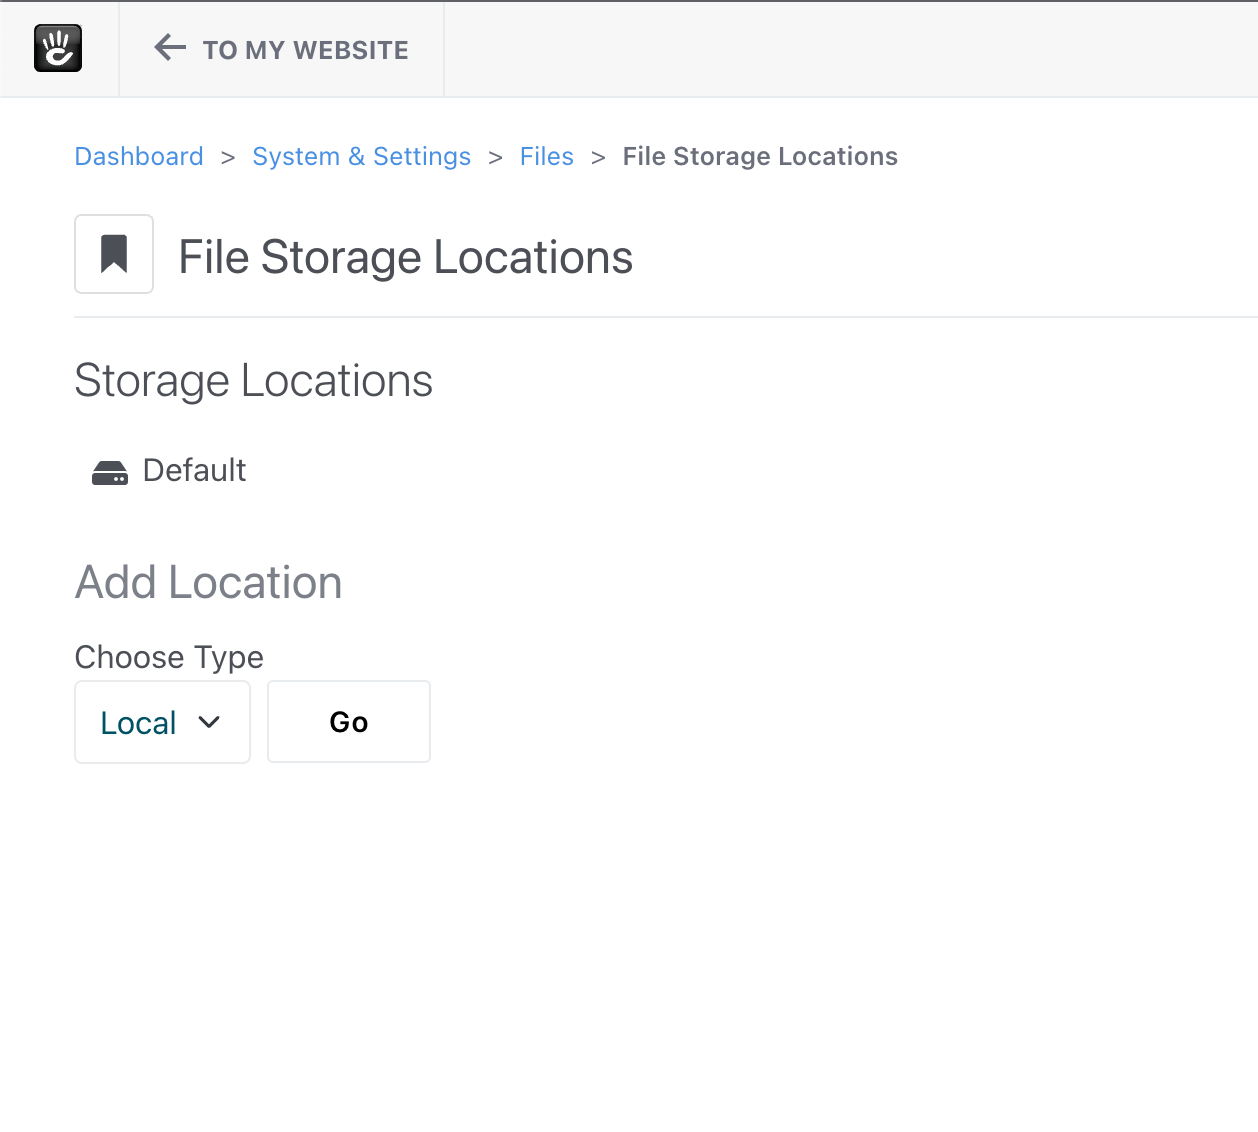 File Storage Locations List